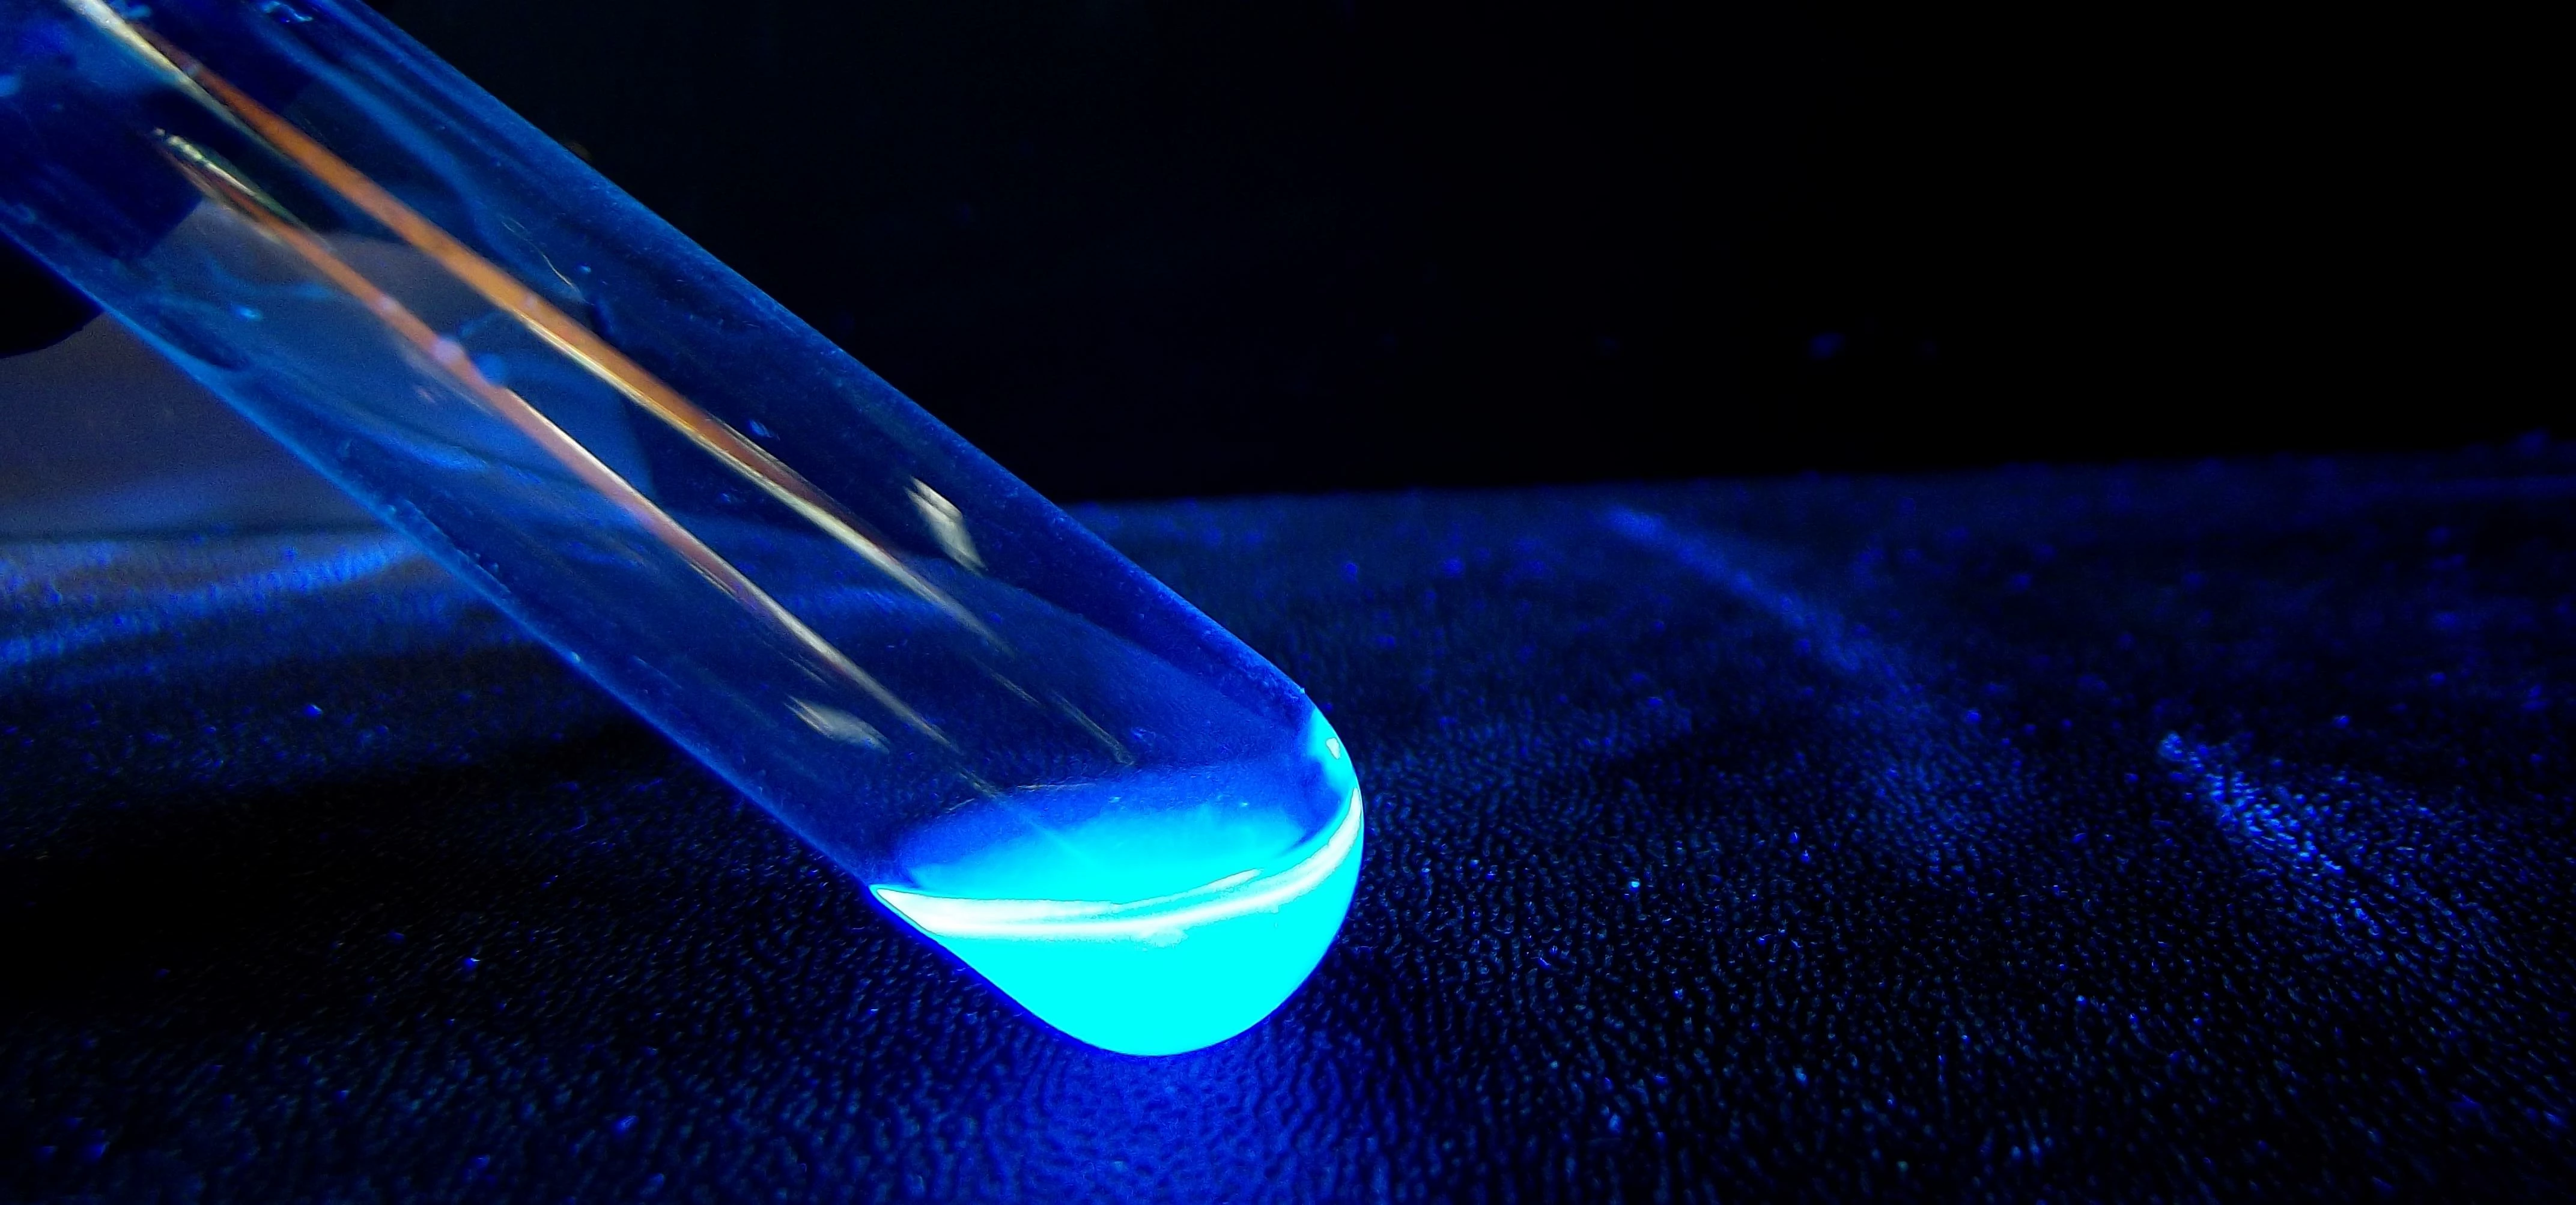 7-hidroxy-4-methylcoumarin under long-wave UV light